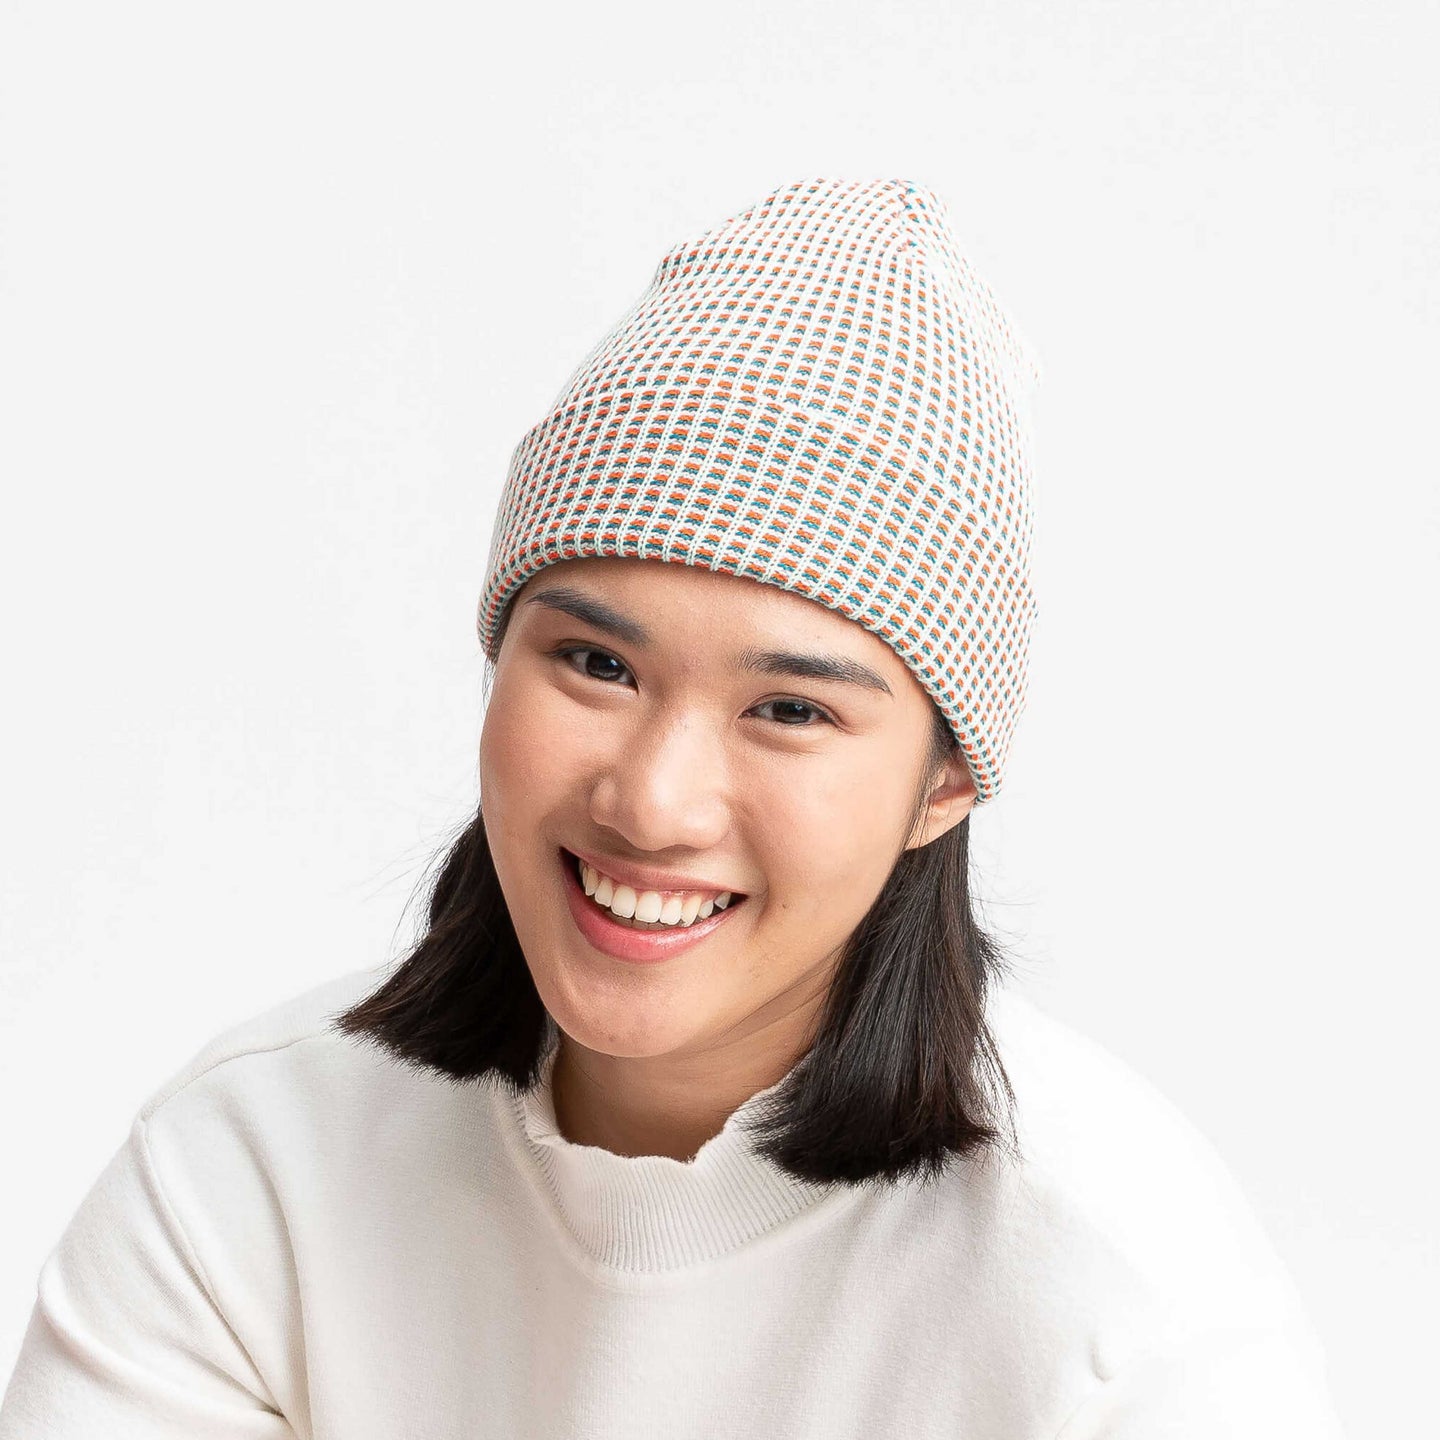 Grid Simple Rib Hat knitted cap